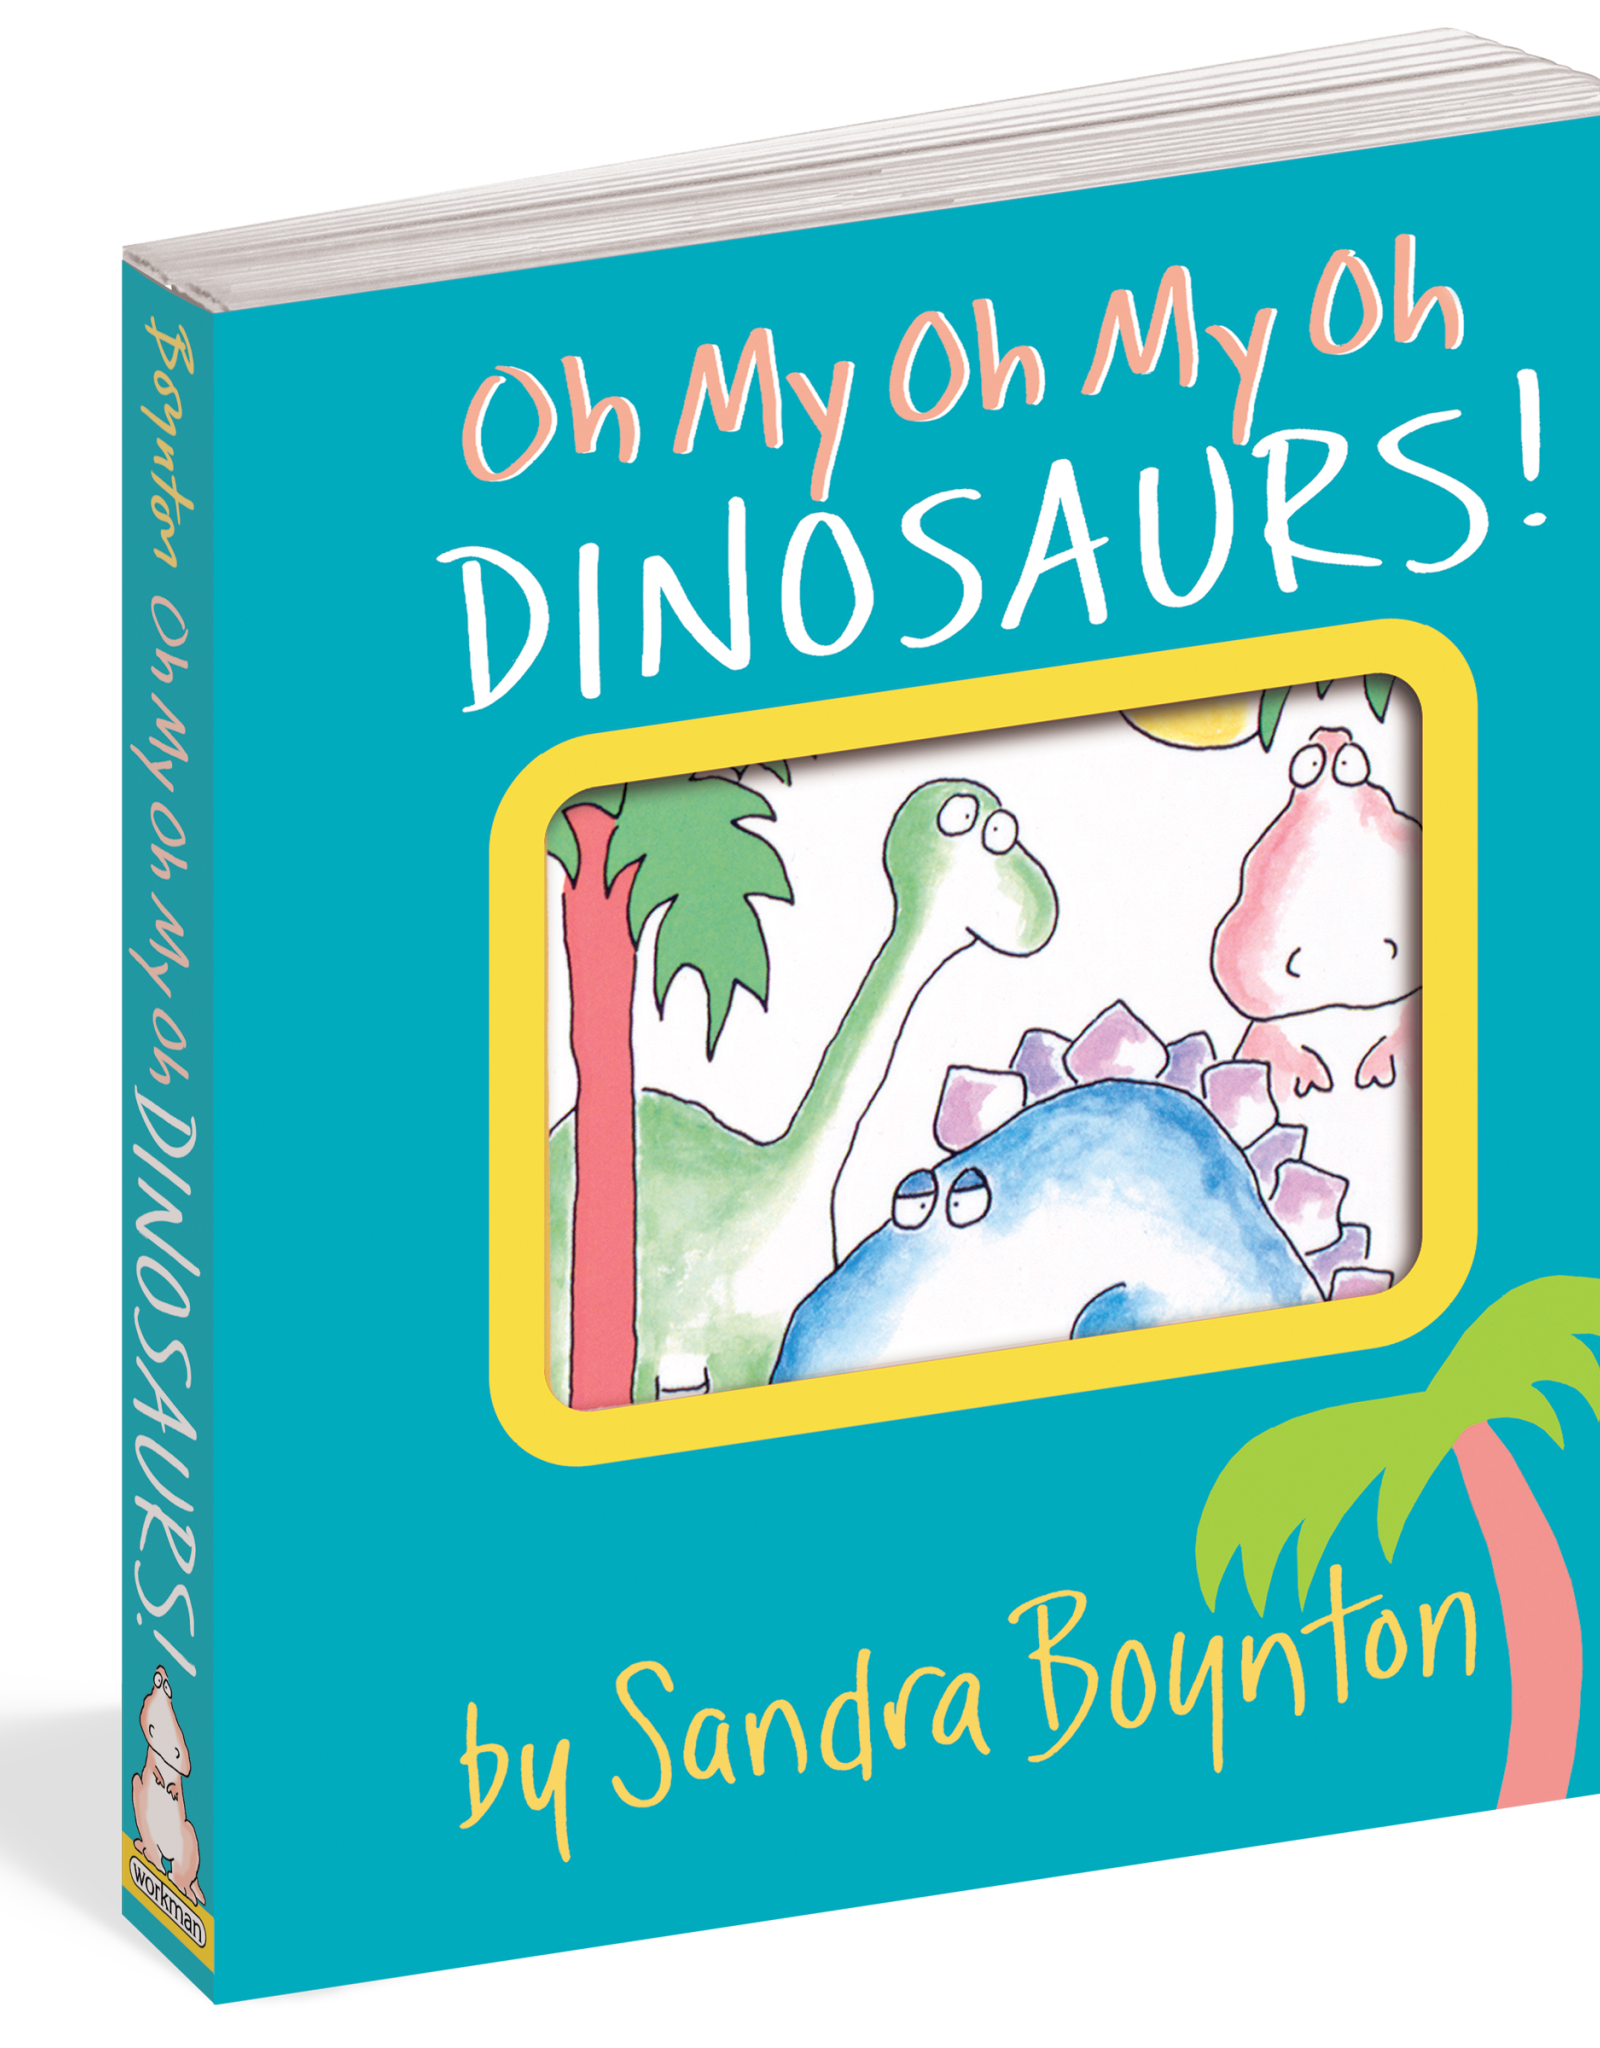 Simon & Schuster BOYNTON: Oh My Oh My Oh Dinosaurs!